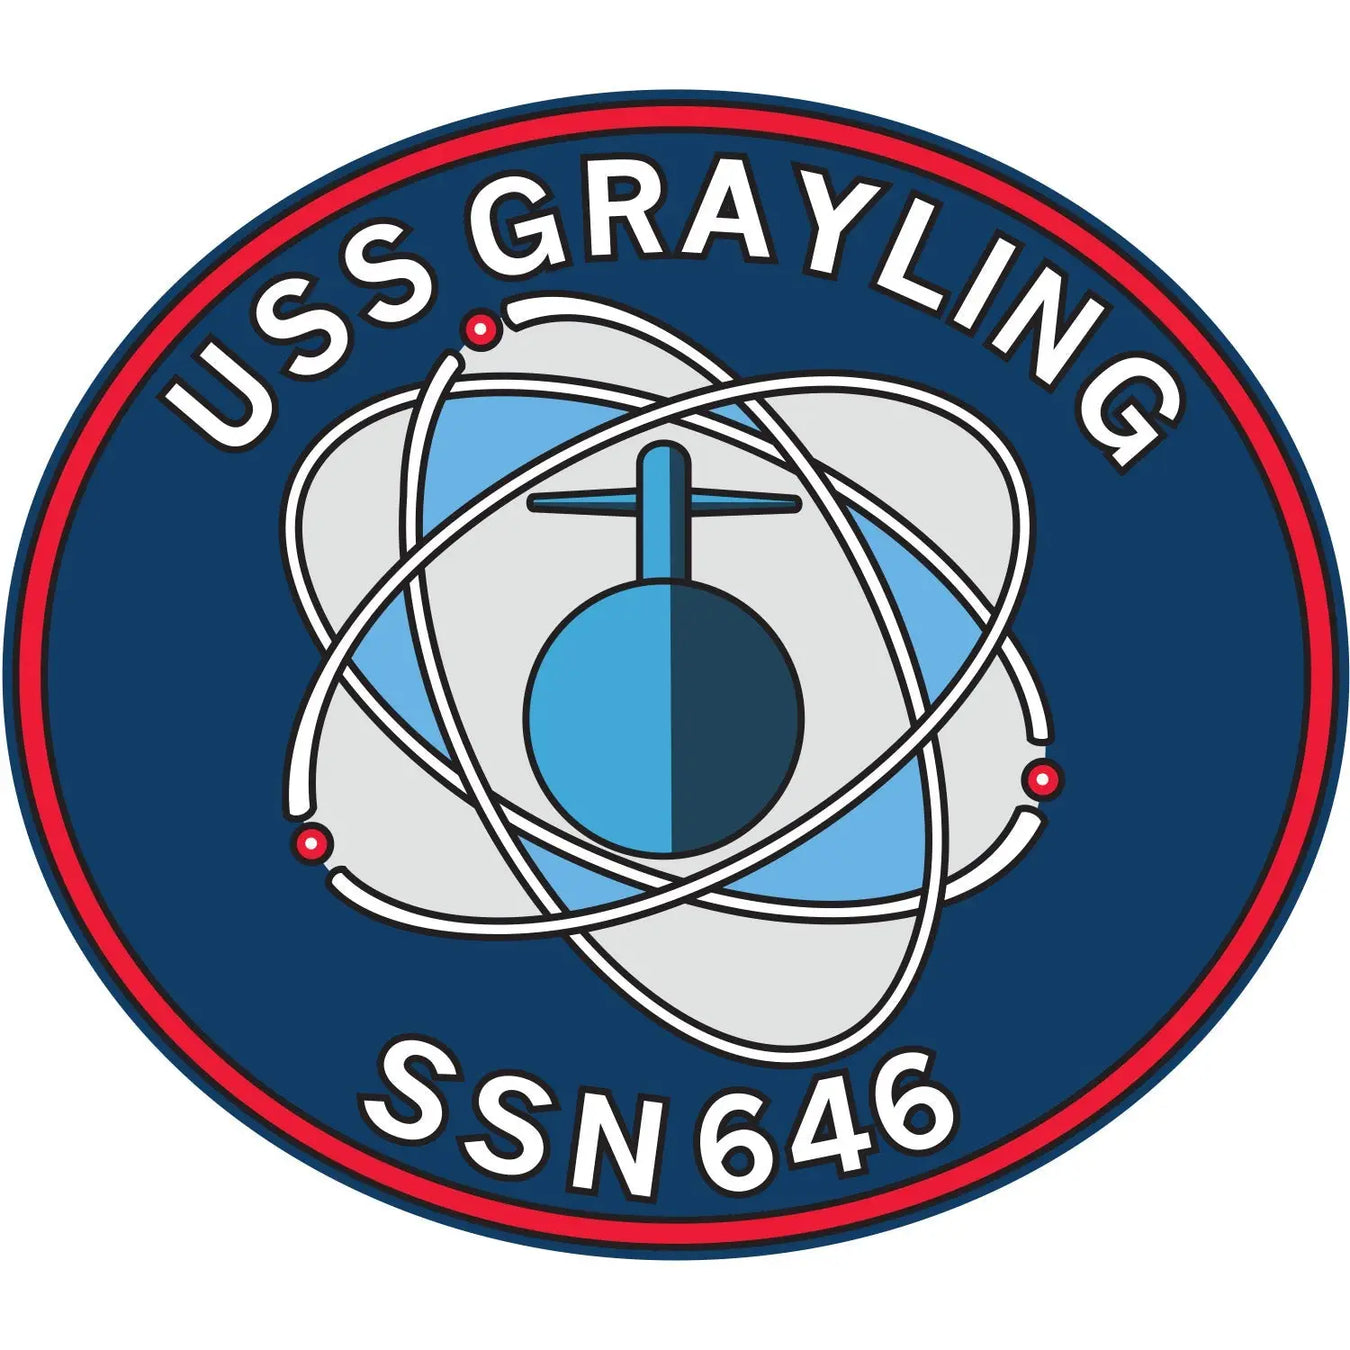 USS Grayling (SSN-646)